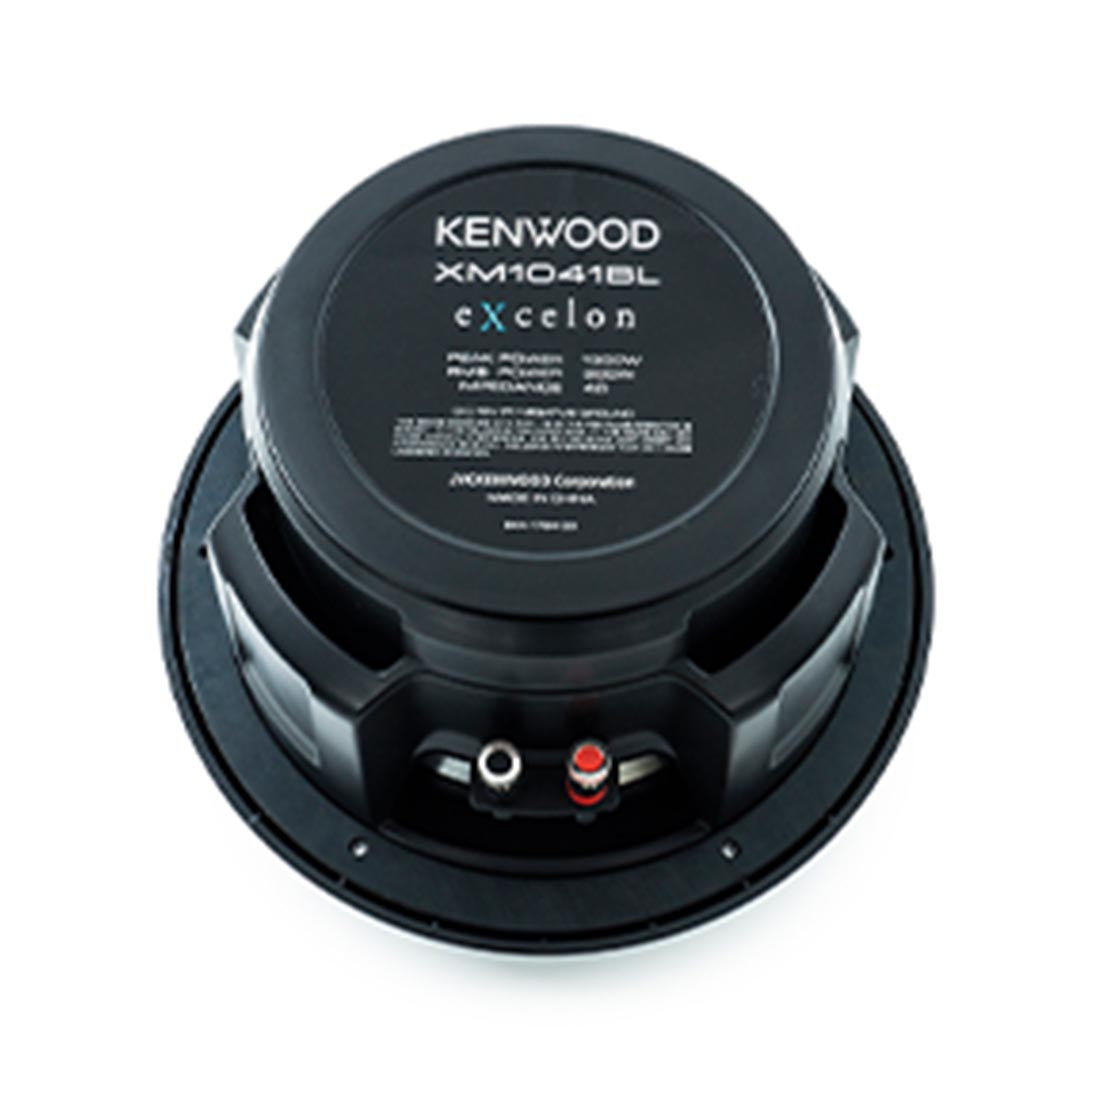 Kenwood XM1041BL Rear